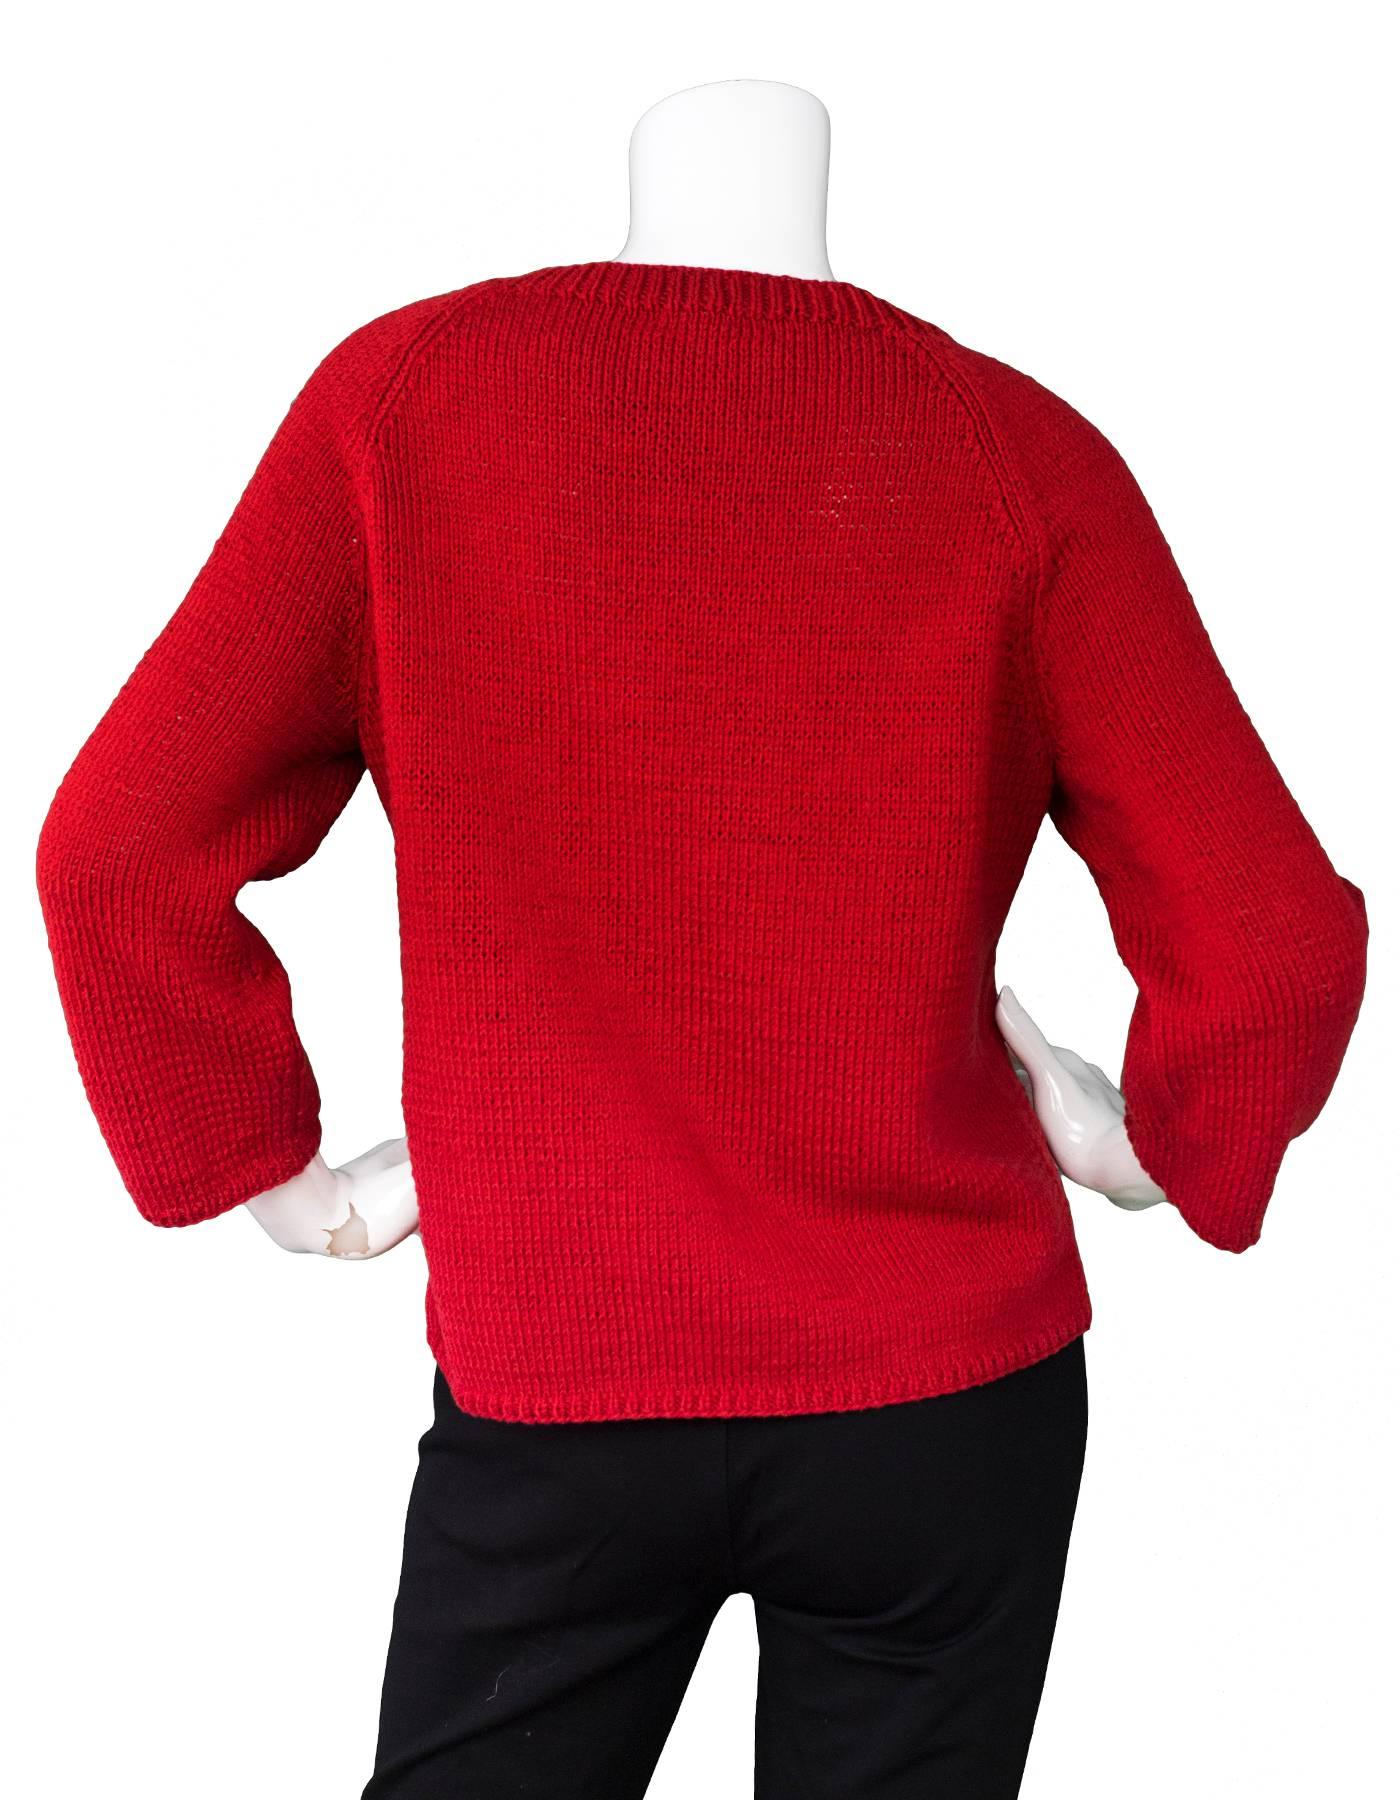 oscar de la renta red sweater